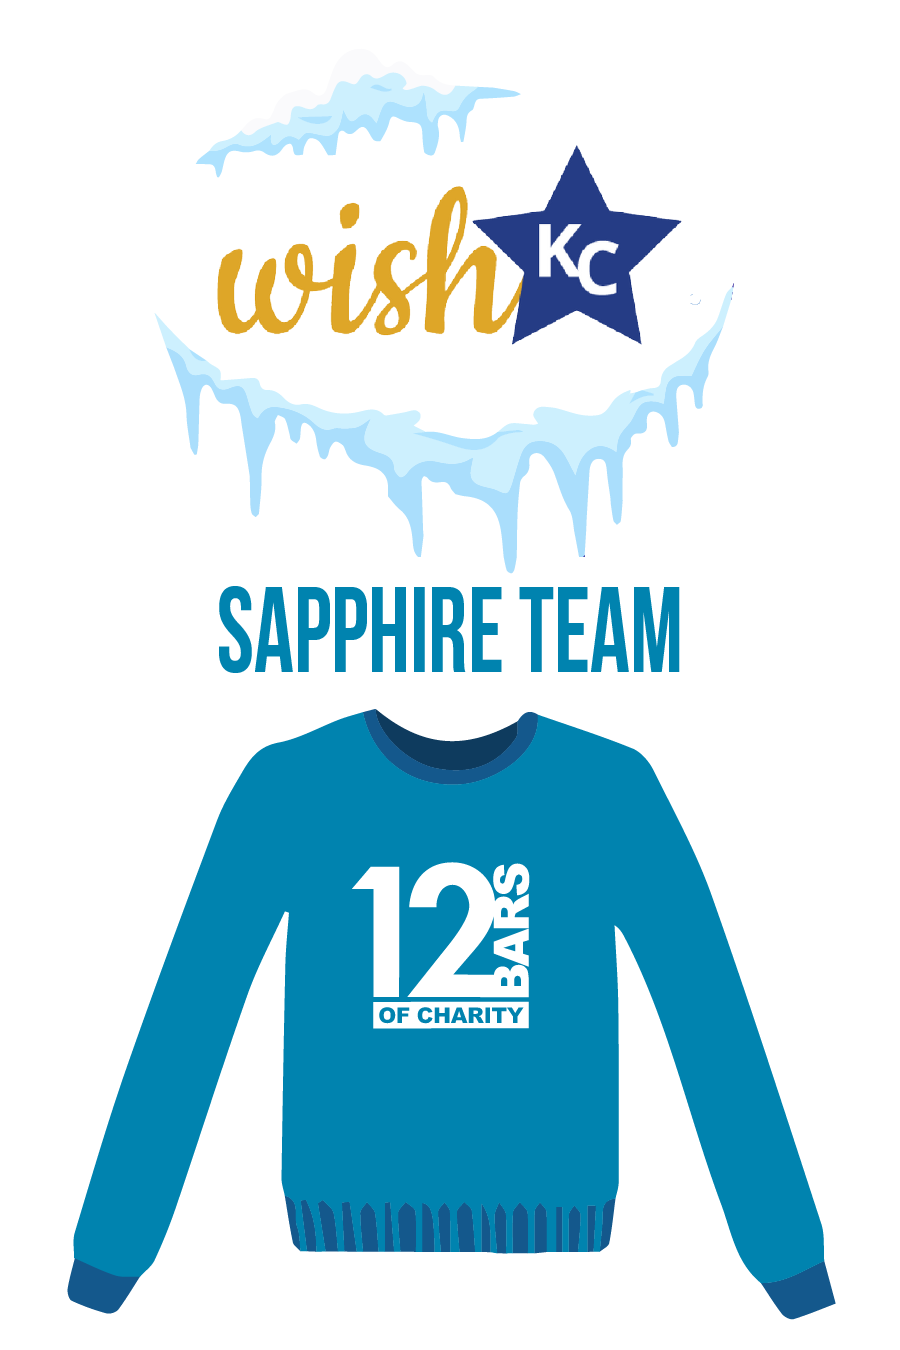 Make A Wish (KC) - Team Sapphire